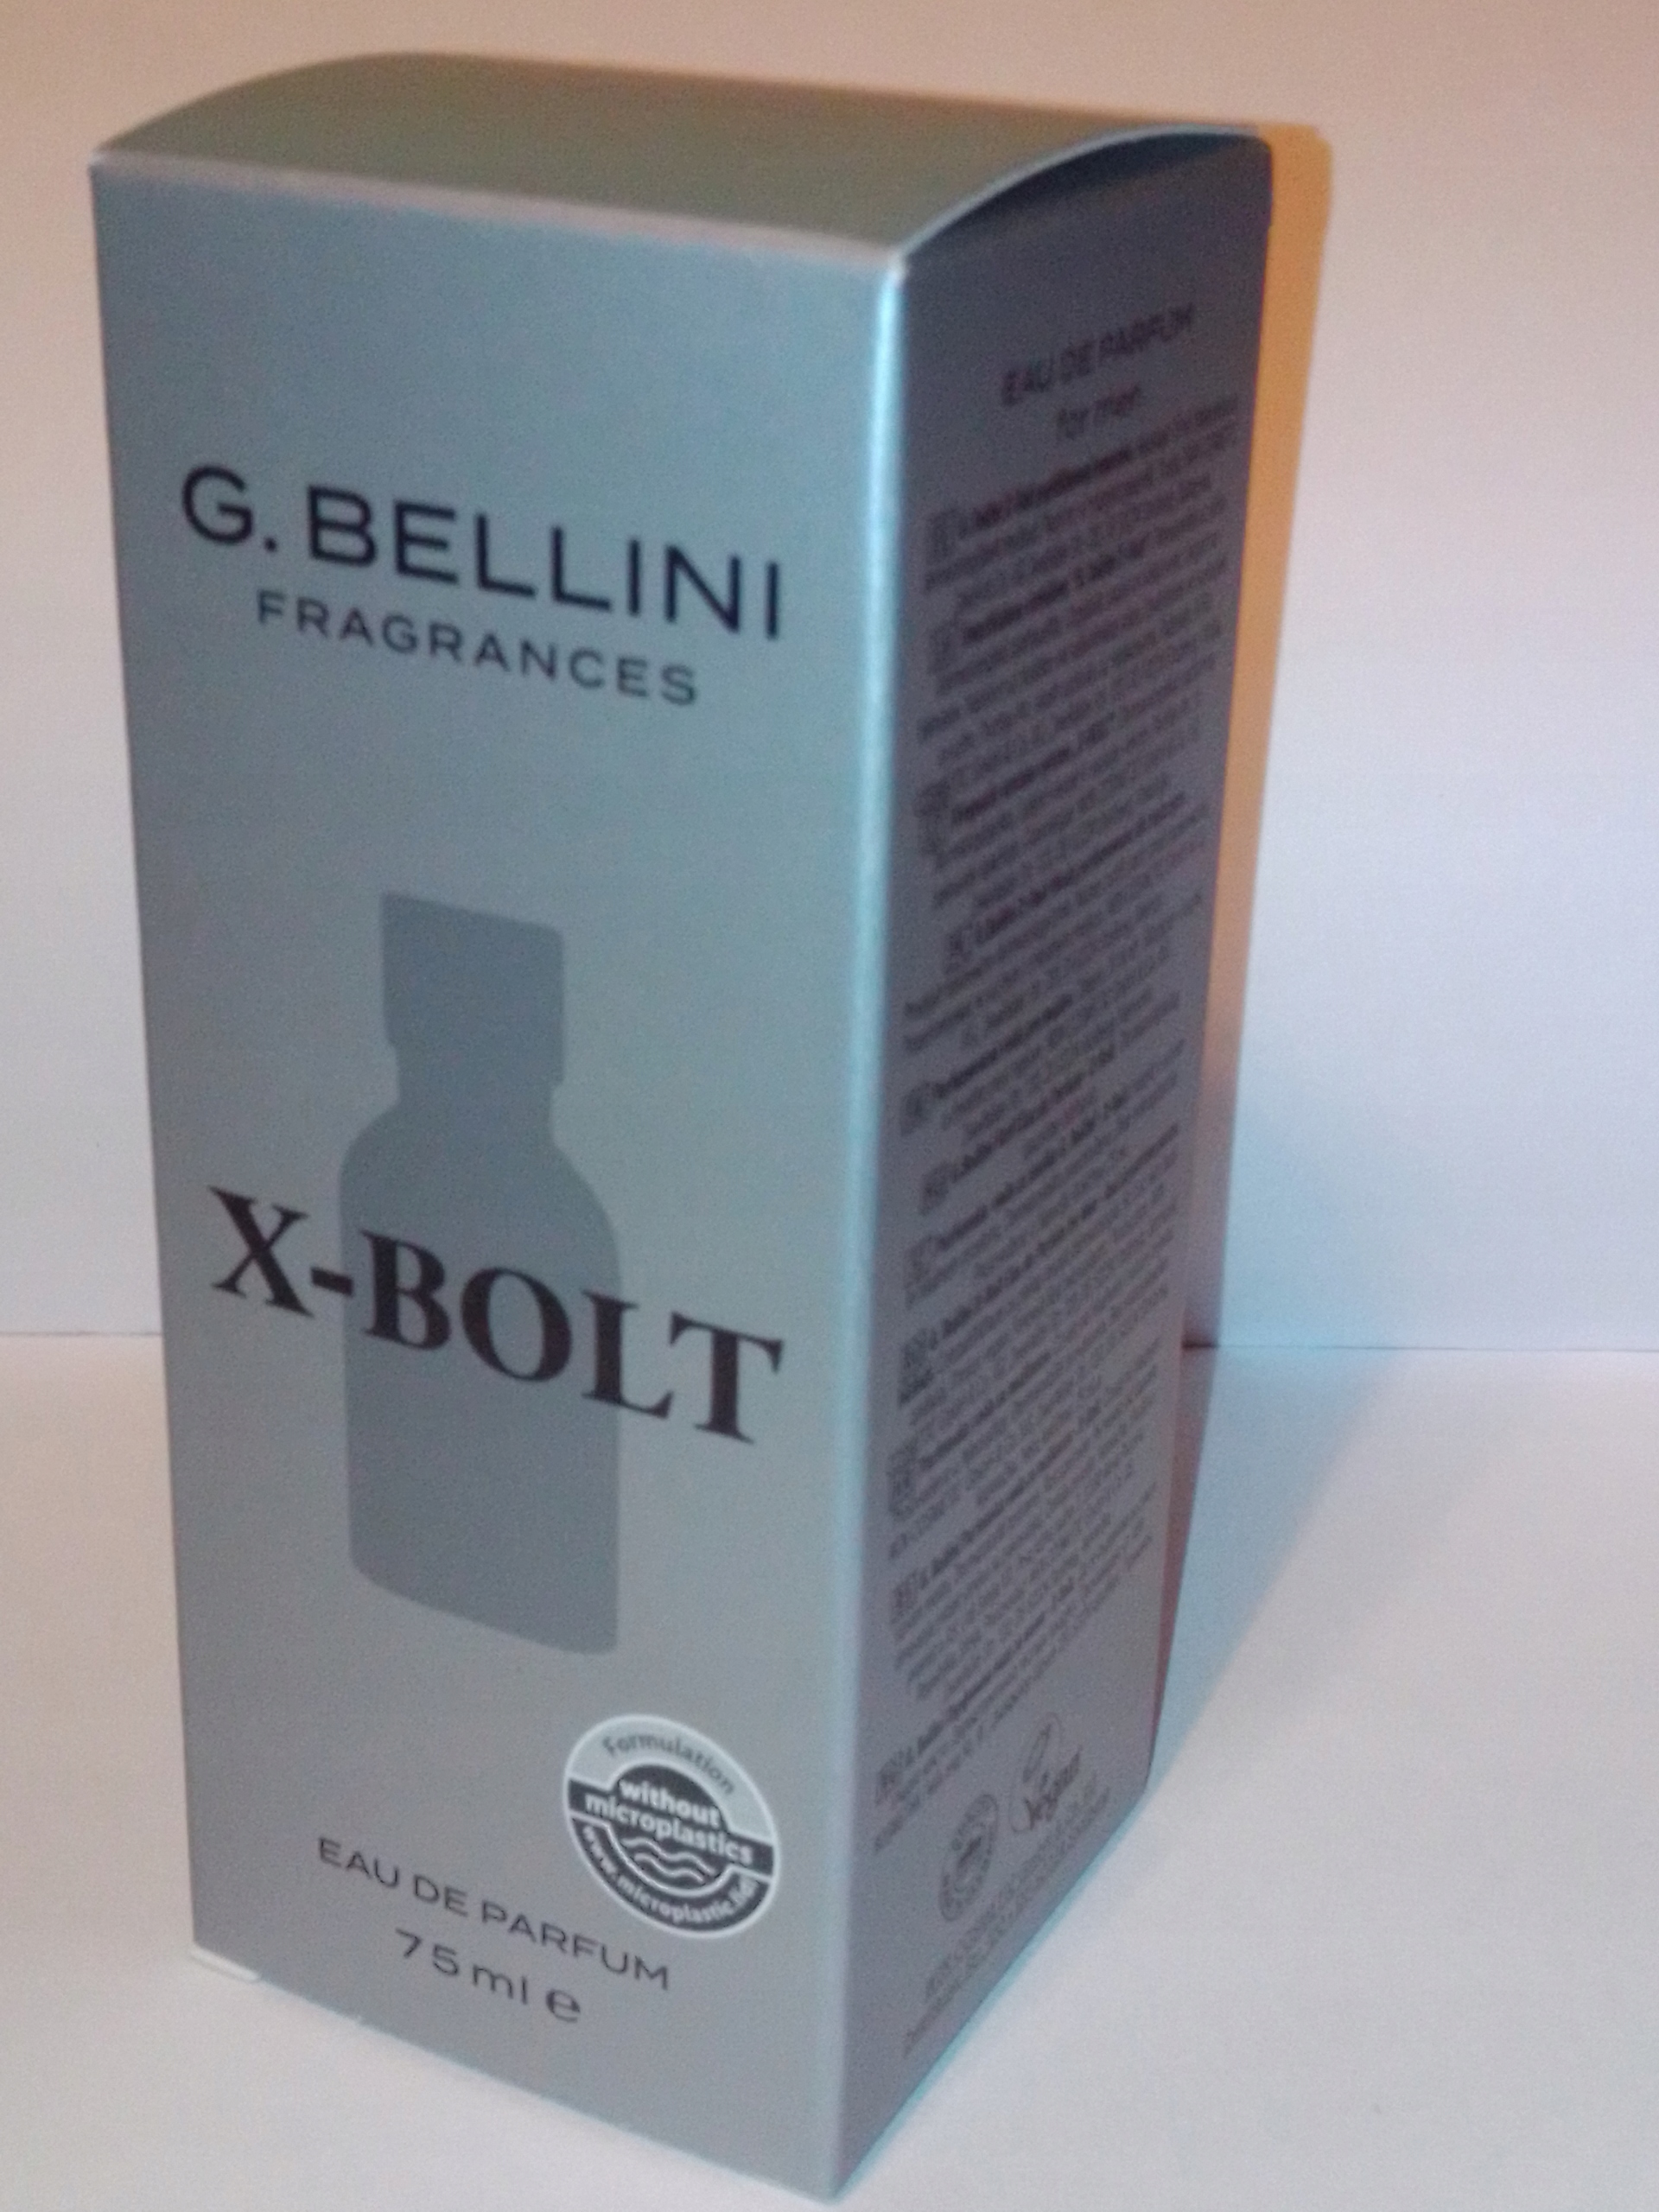 G. Bellini Fragrances X-BOLT Woda Perfumowana 75ml